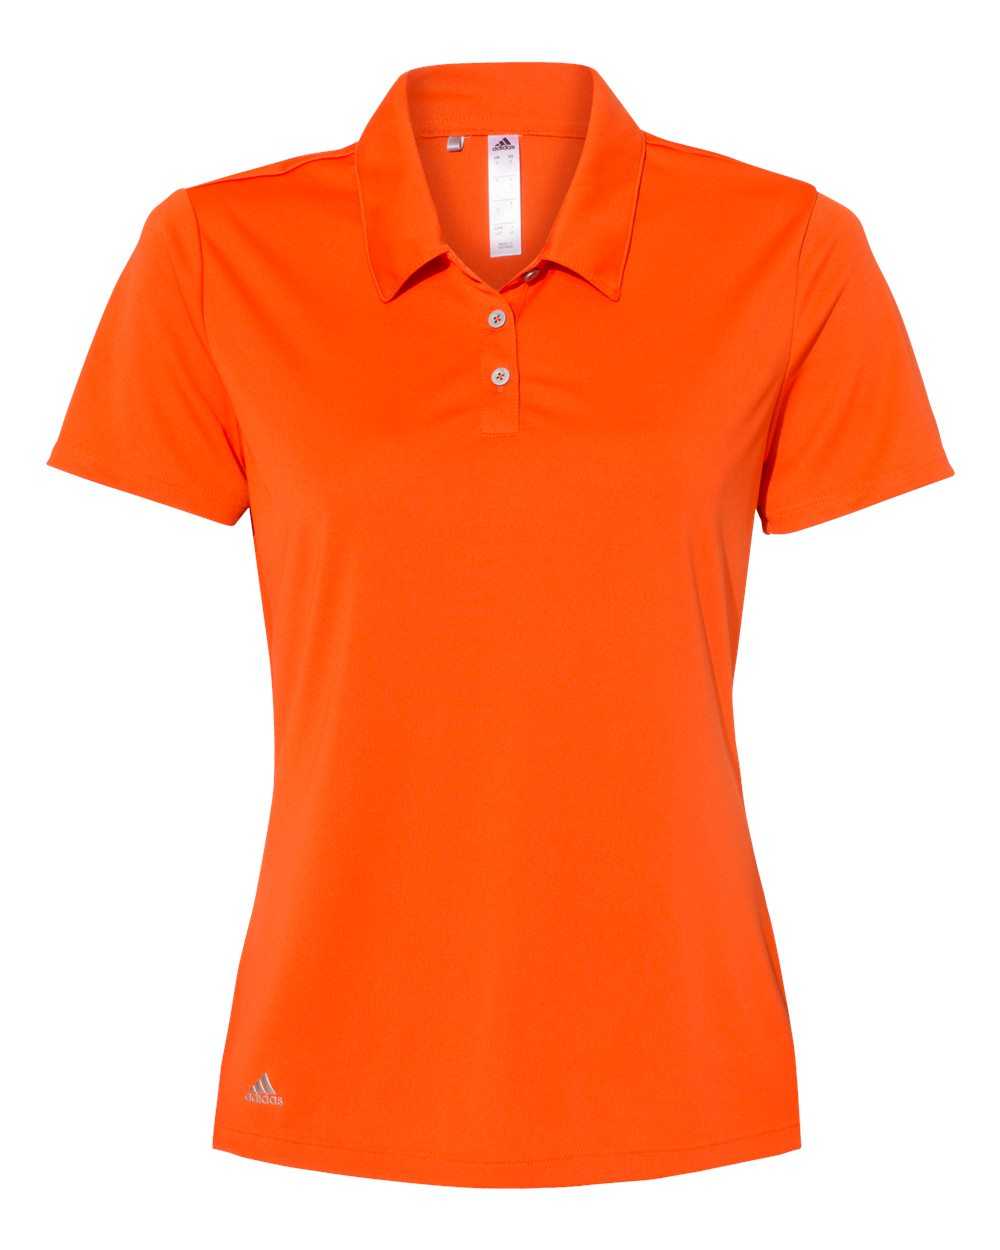 Adidas A231 Women's Performance Sport Shirt - Orange - HIT a Double